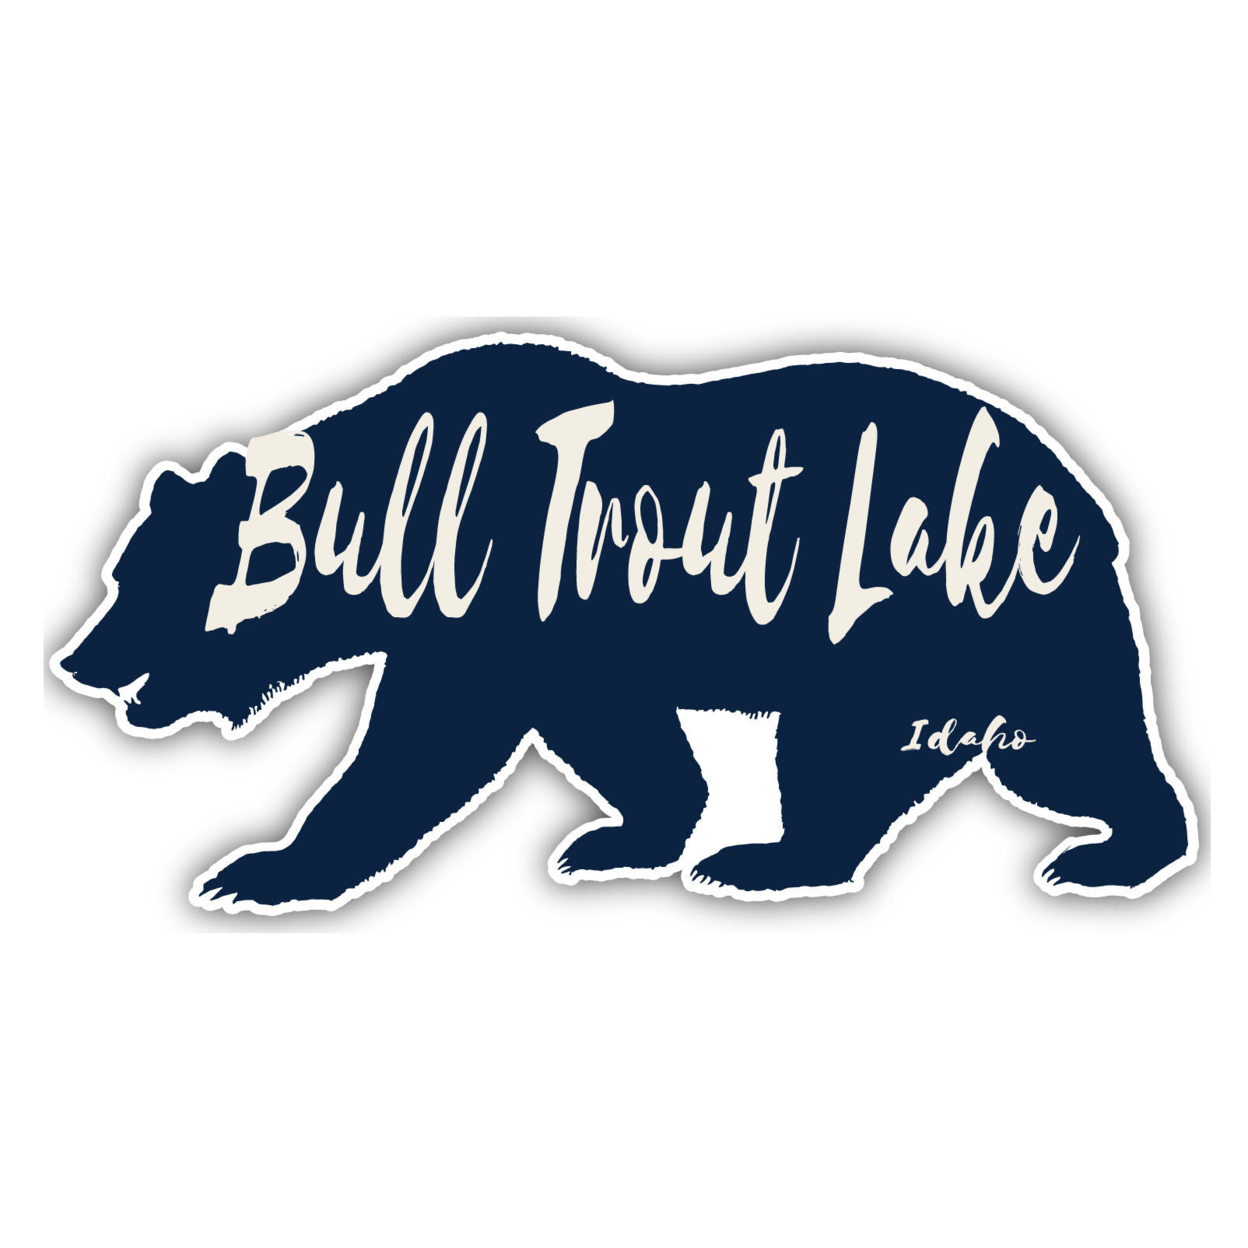 Bull Trout Lake Idaho Souvenir Decorative Stickers (Choose Theme And Size) - Single Unit, 4-Inch, Bear